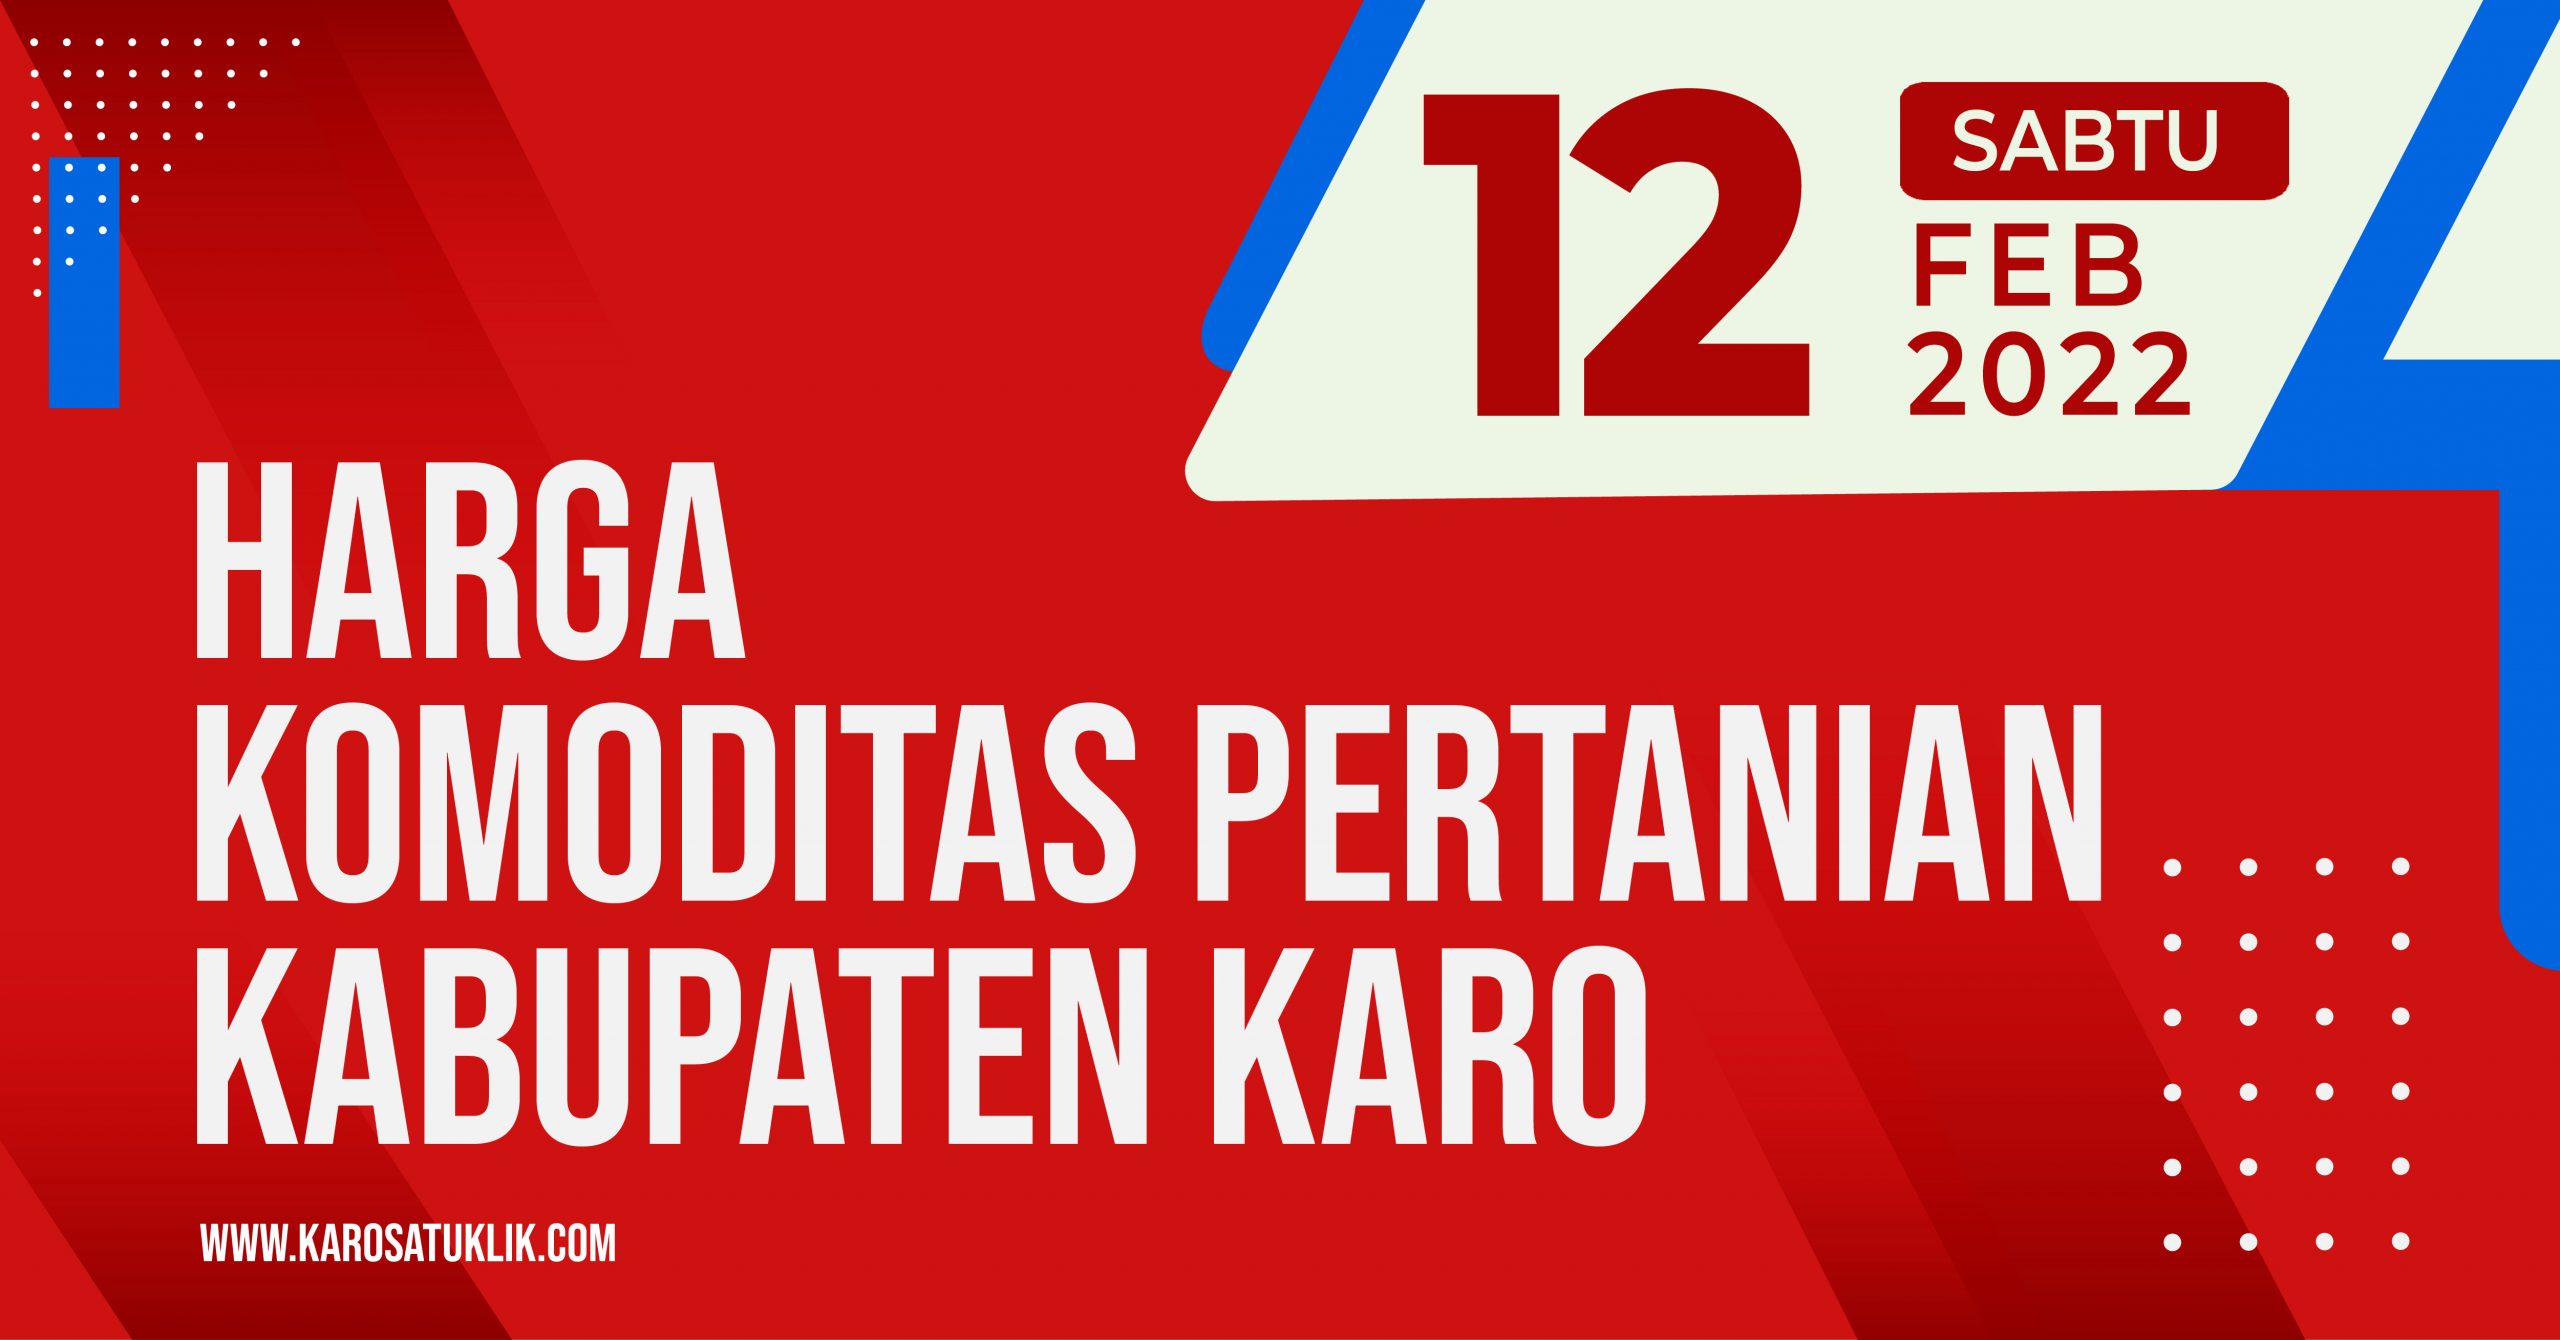 Daftar Harga Komoditas Pertanian Kabupaten Karo, 12 Februari 2022